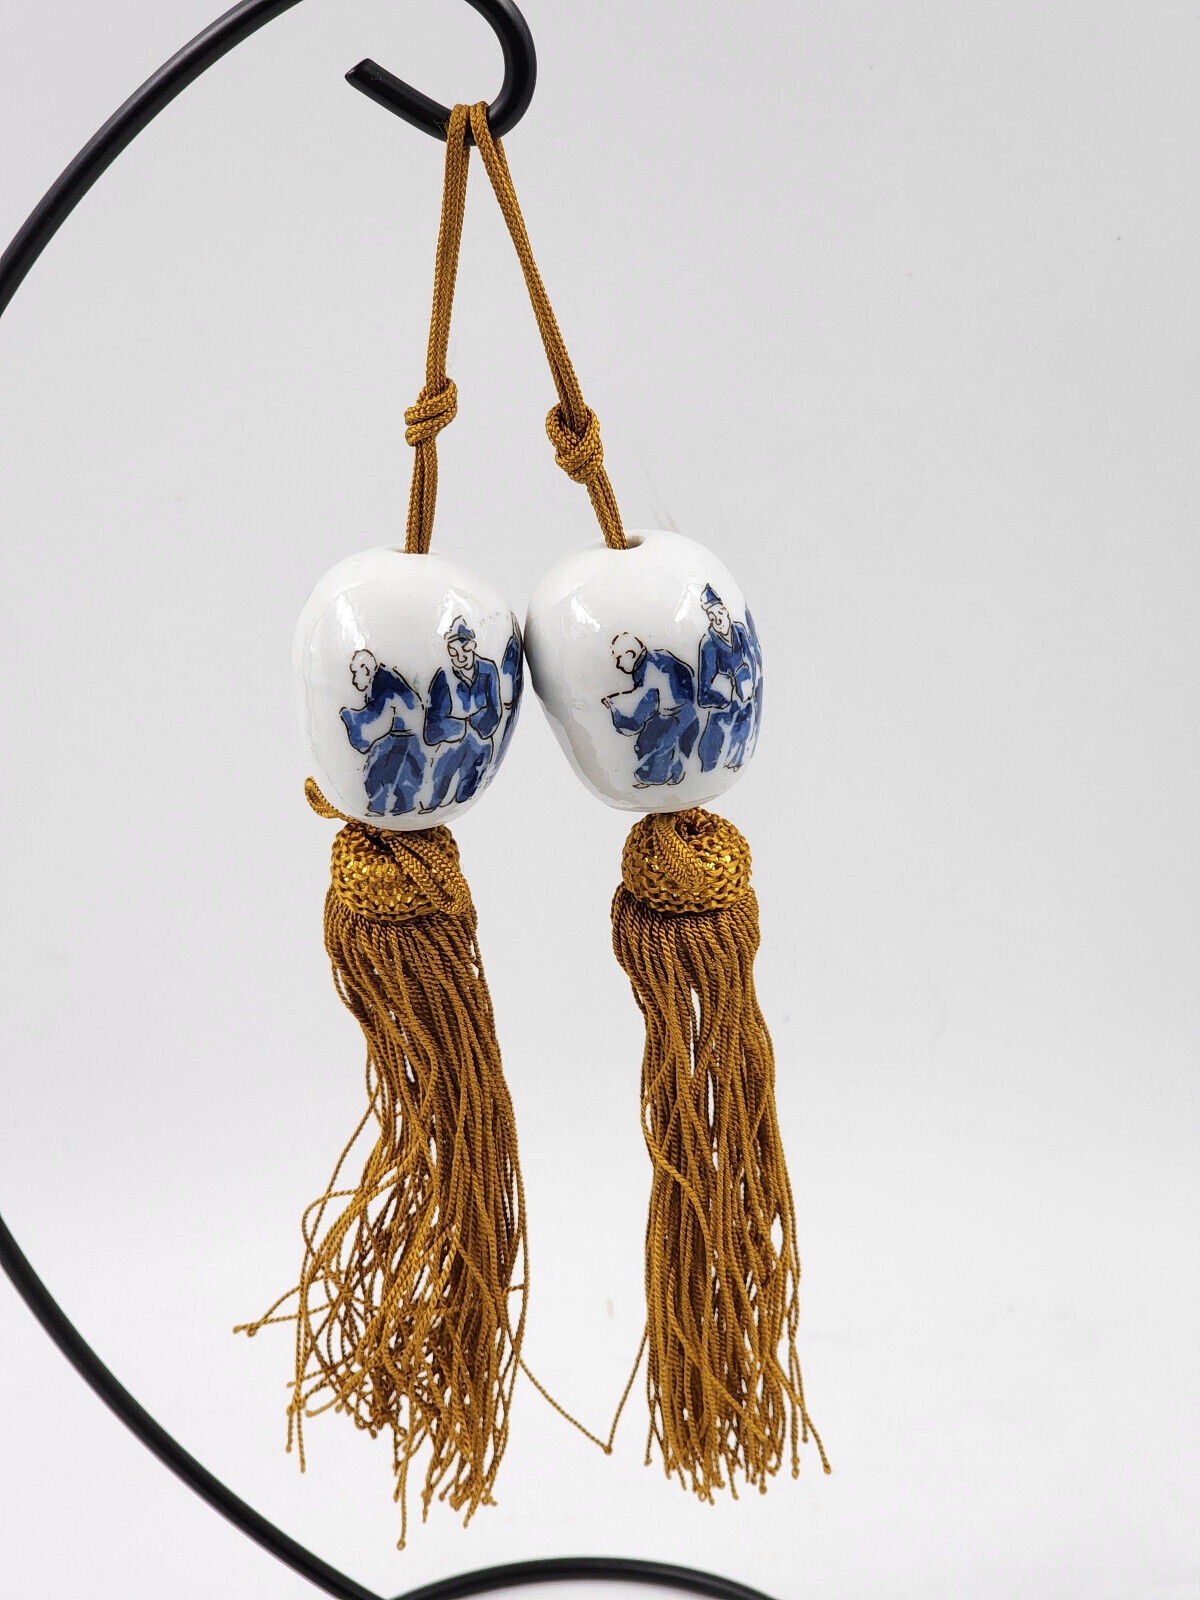 Vintage Japanese Hanging Scroll Weights Fuchin Porcelain, Gold Tassels